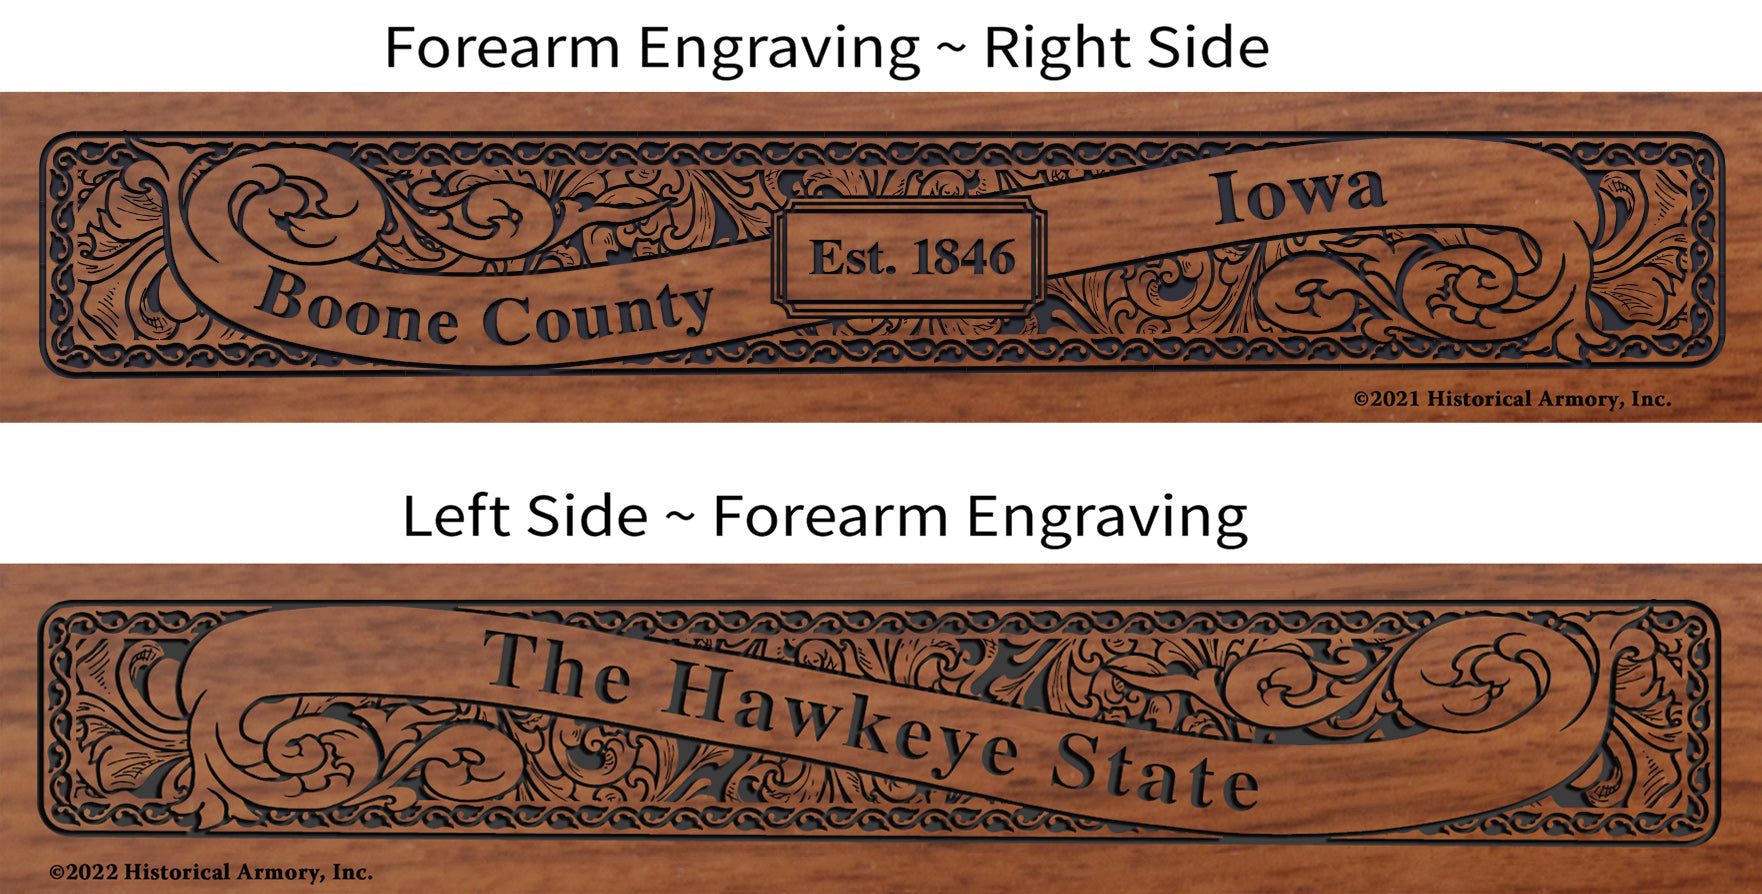 Boone County Iowa Engraved Rifle Forearm